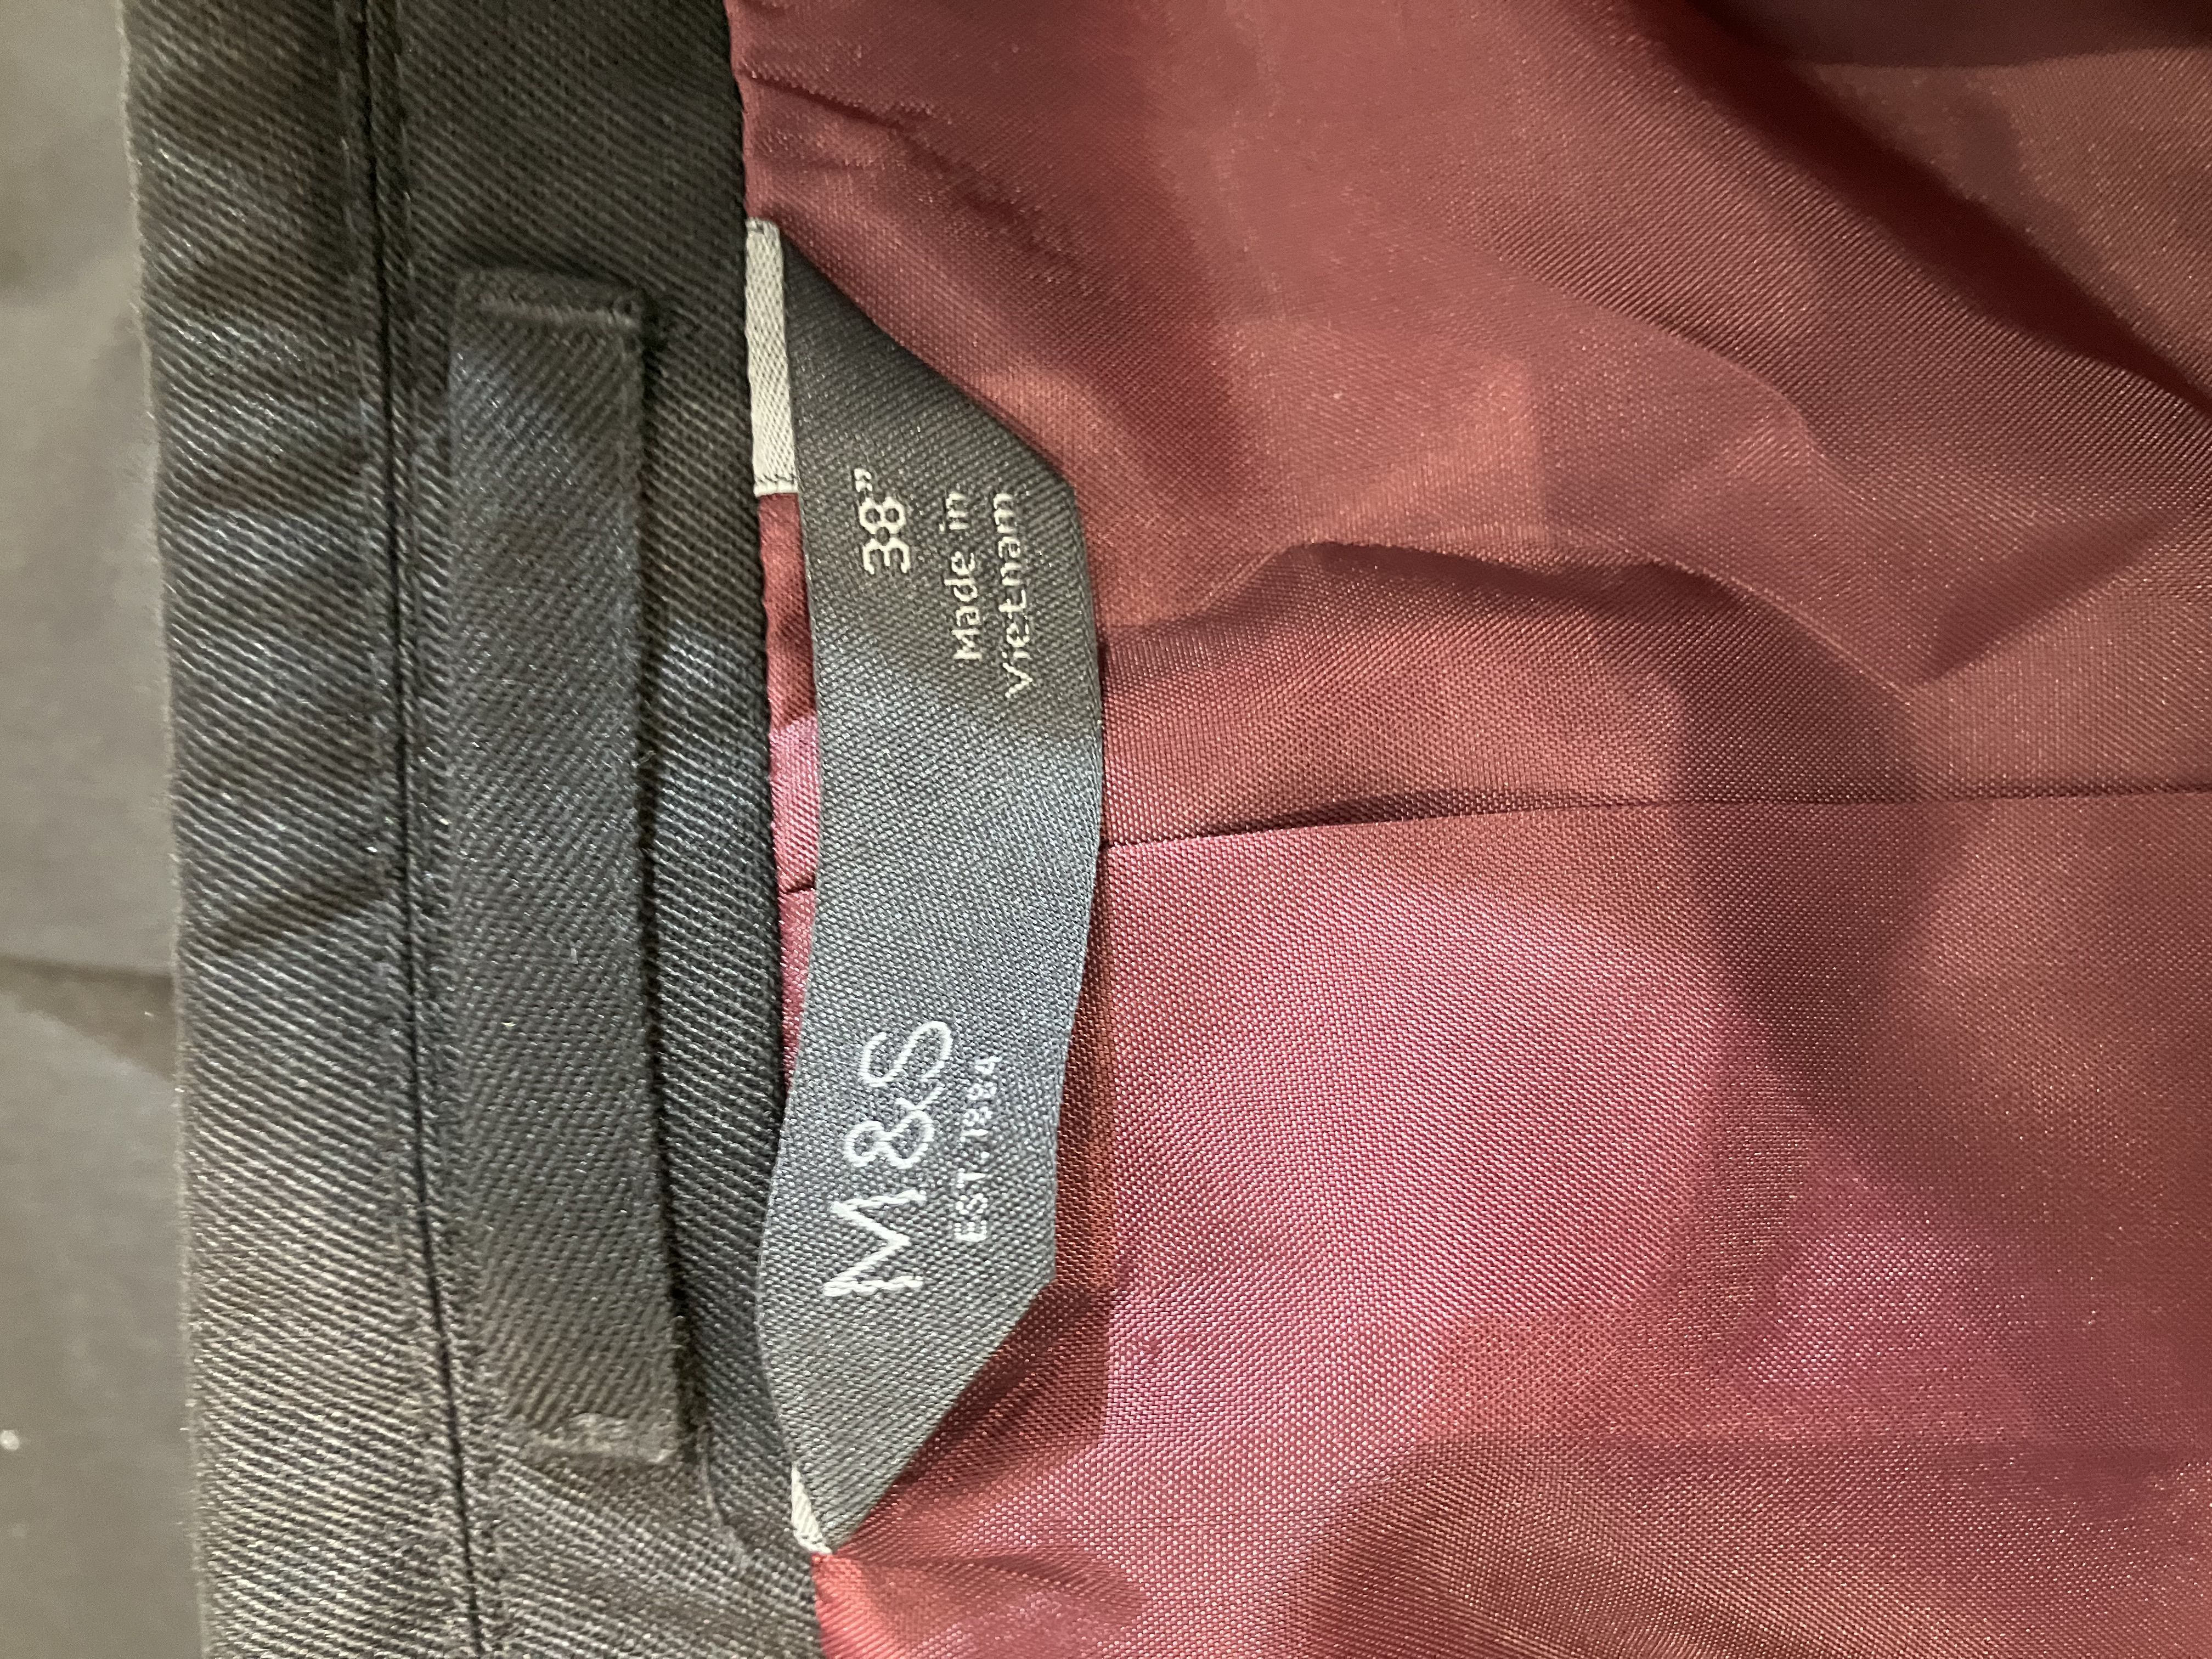 M & S Slim Dinner Jacket Worn By Remy Hii - Image 2 of 2